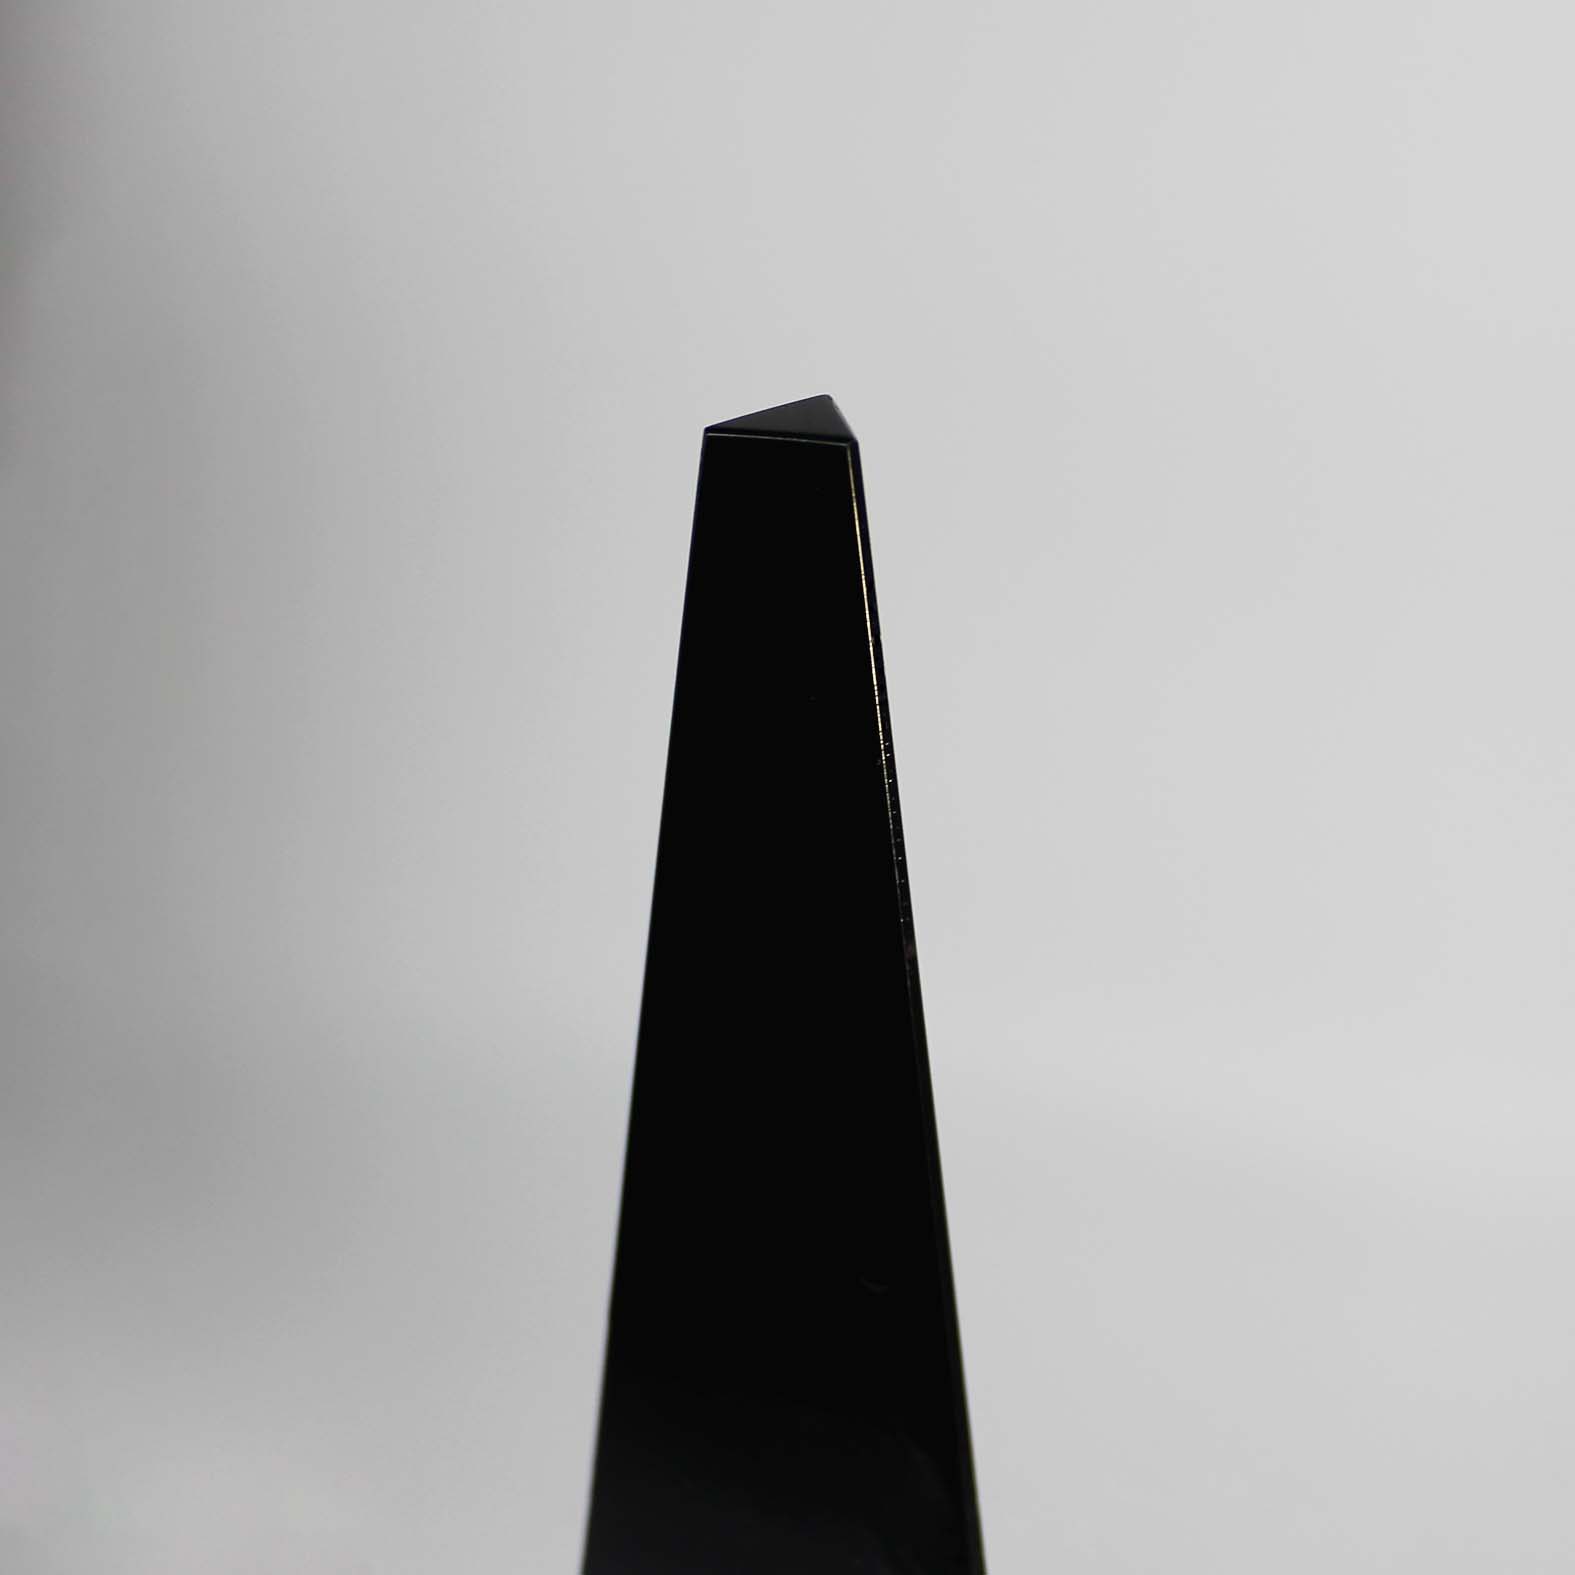 High Quality Glass Material Black Paint Truncated Triangular Pyramid Prism